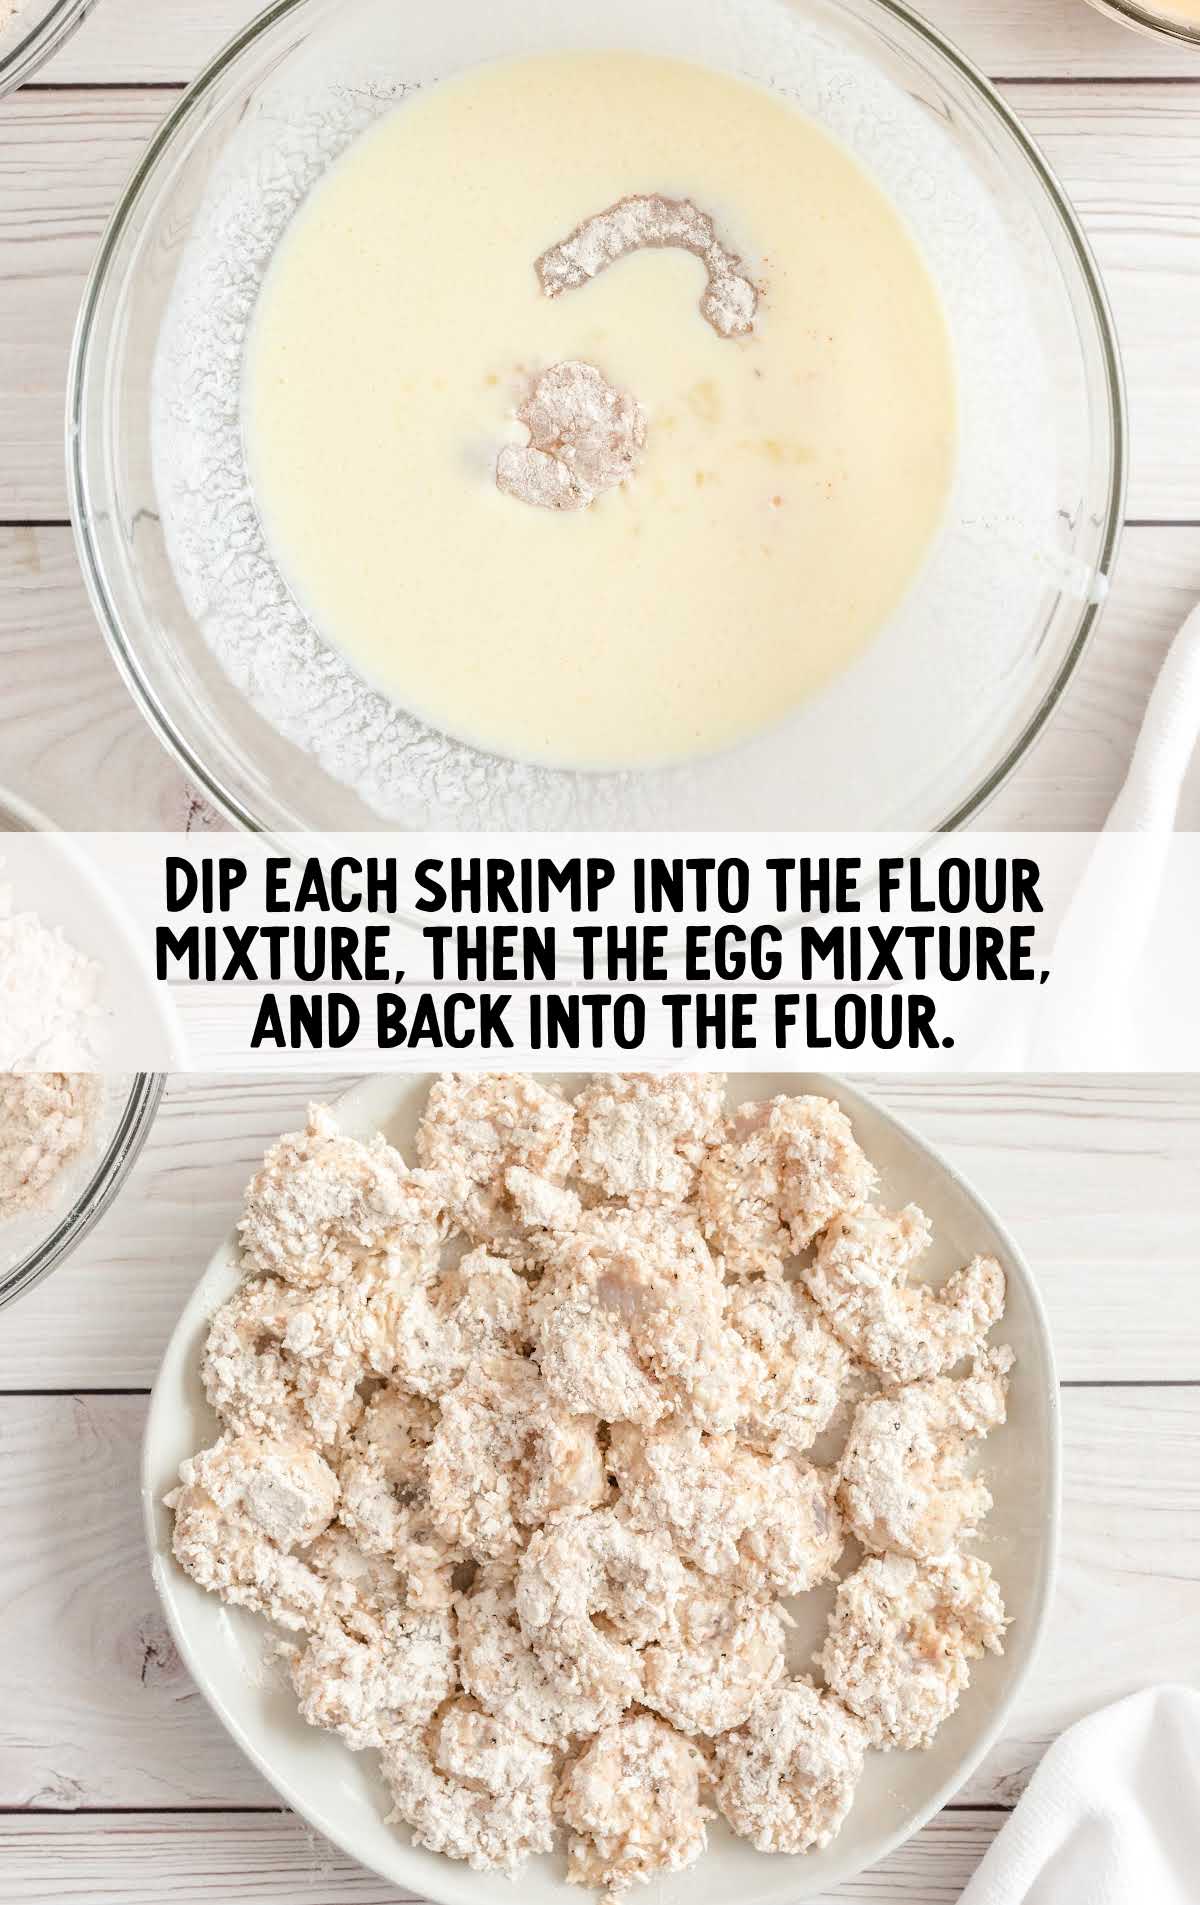 Bang Bang Shrimp process shot of shrimp dipped into the egg mixture then into the flour mixture